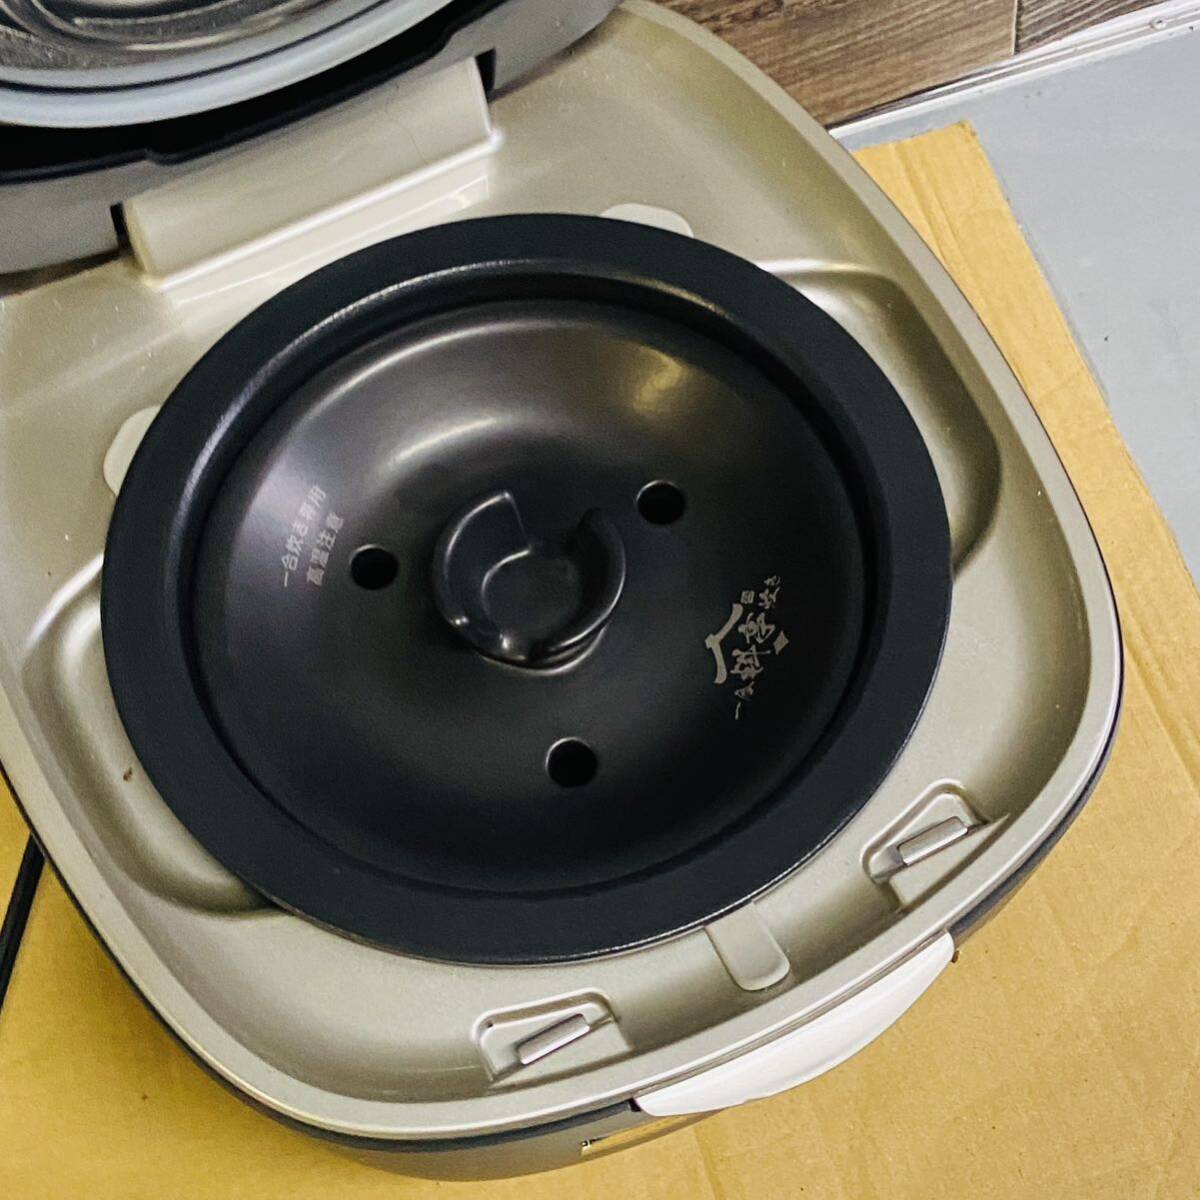 TIGER Tiger JPL-S100 KT earthenware pot pressure IH jar rice cooker rice cooker 5.5. used power supply has confirmed 